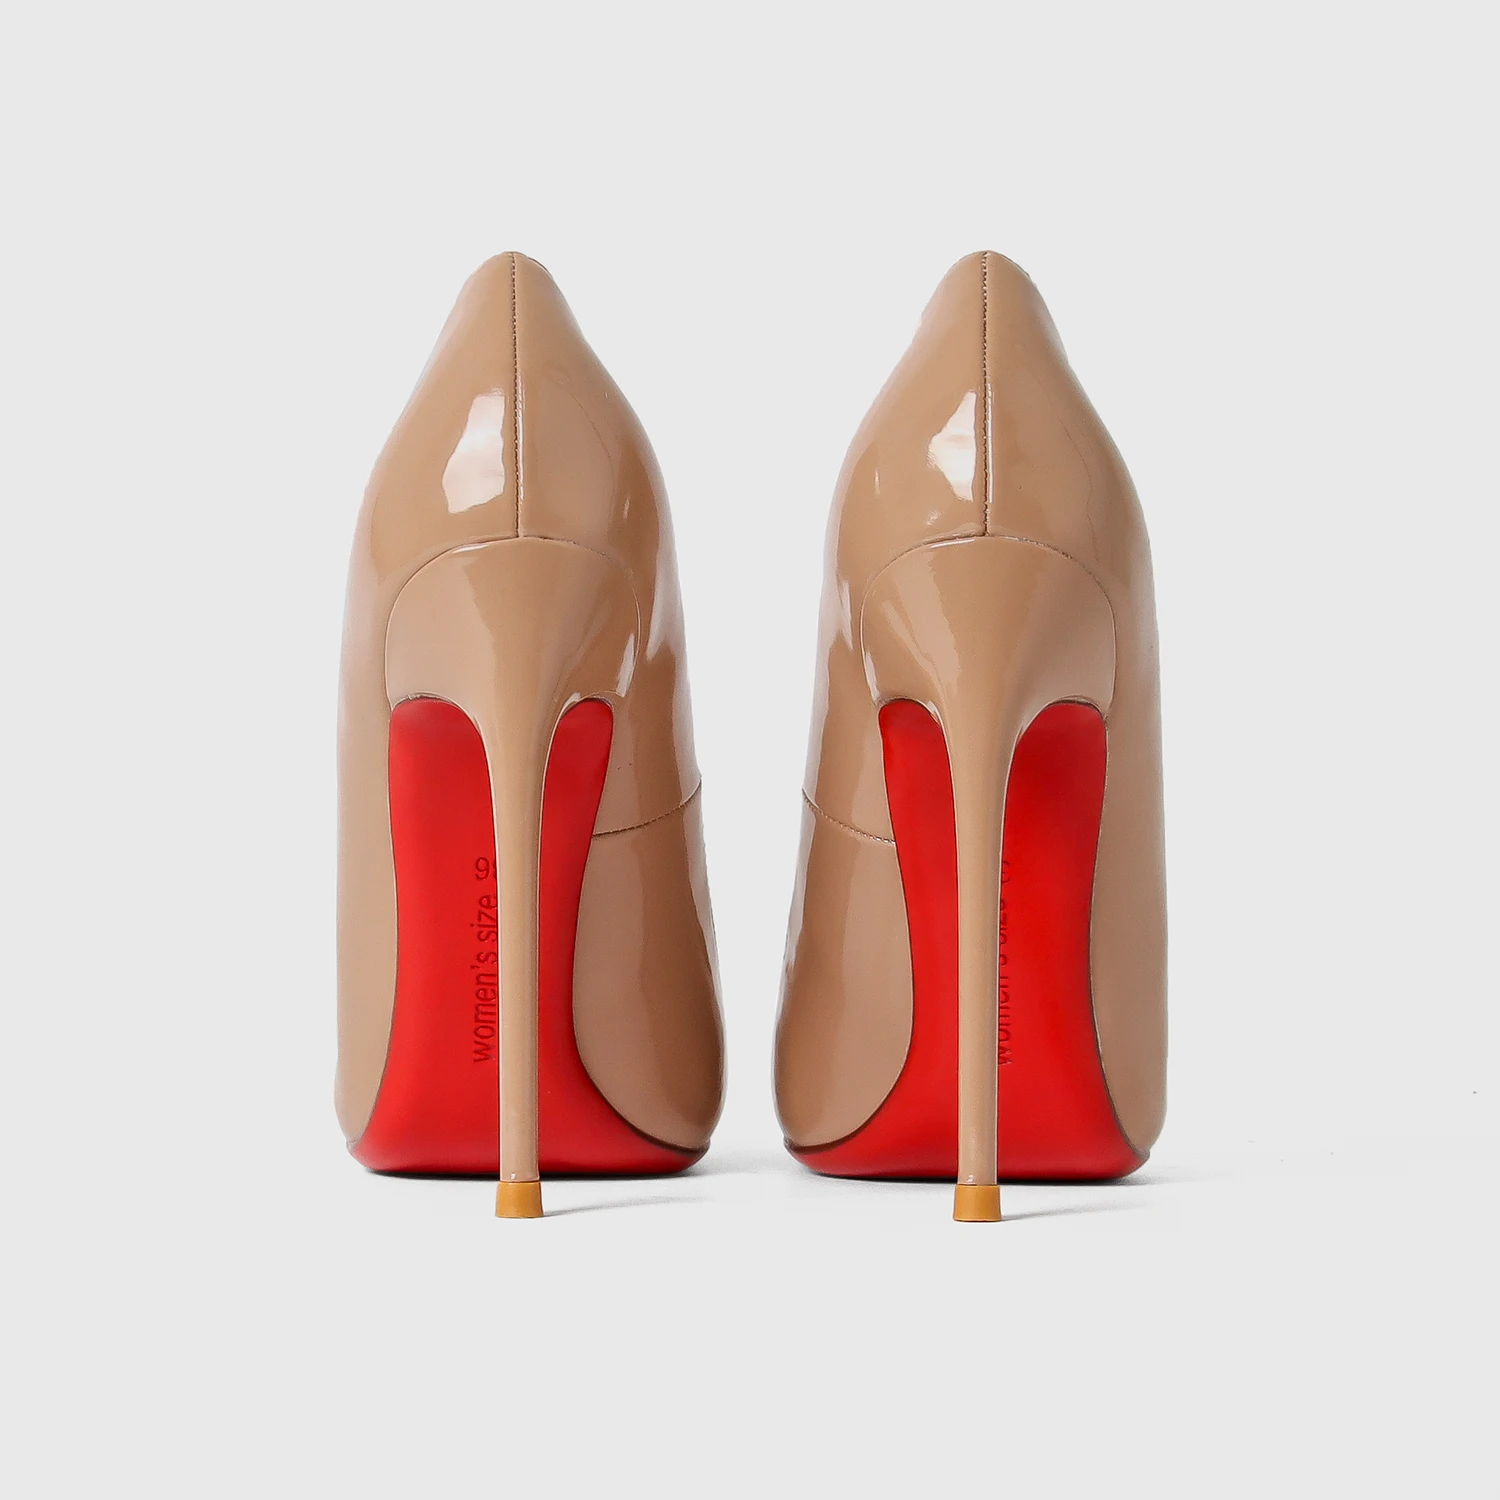 10 Cm Big Size Red Bottom High Heels Brand Pattern Leather Women